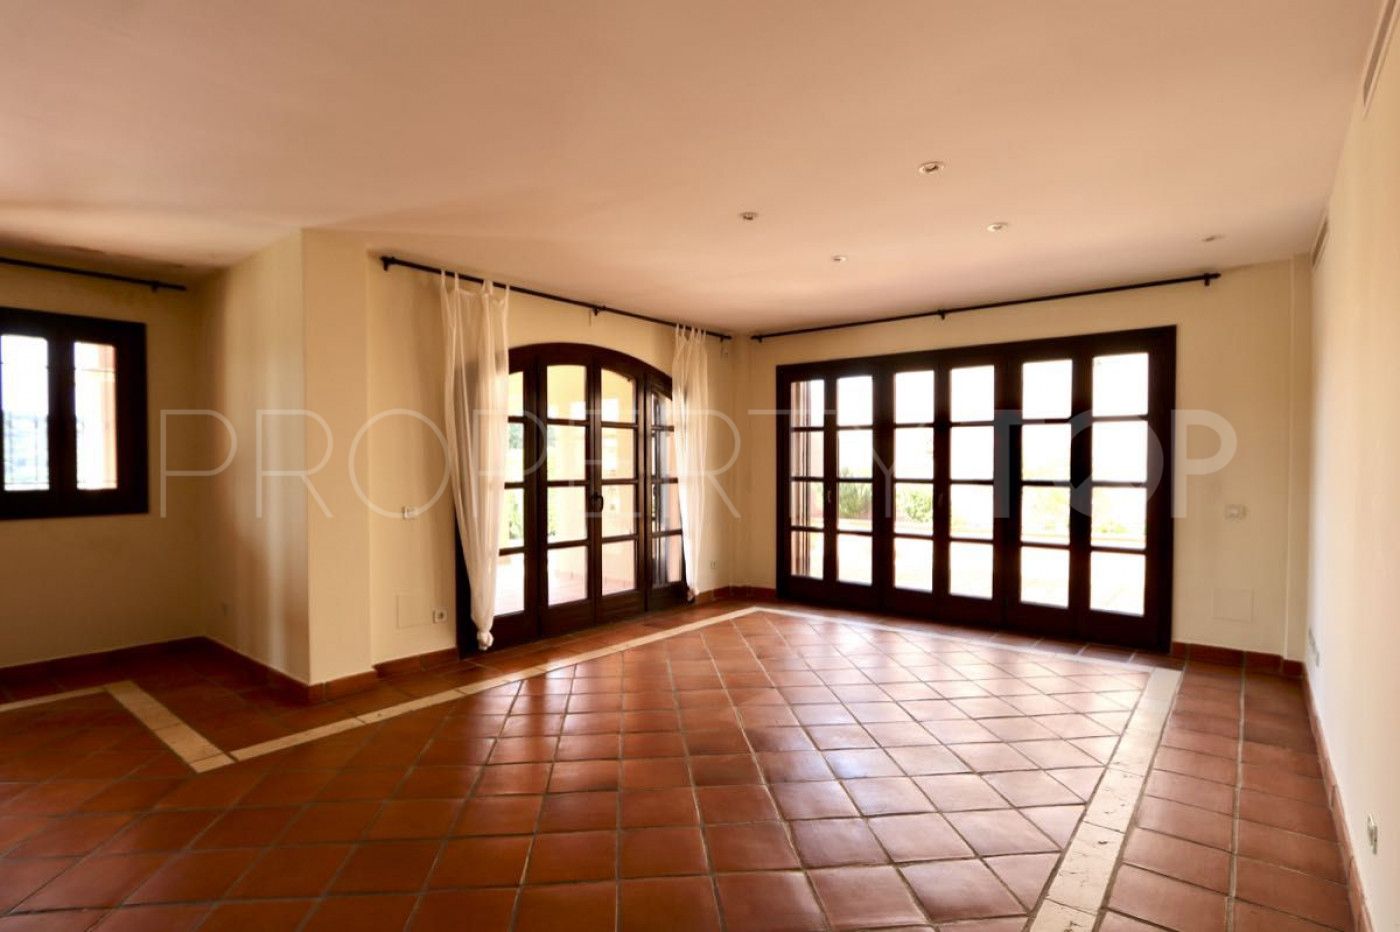 For sale villa in Sotogrande Alto with 4 bedrooms